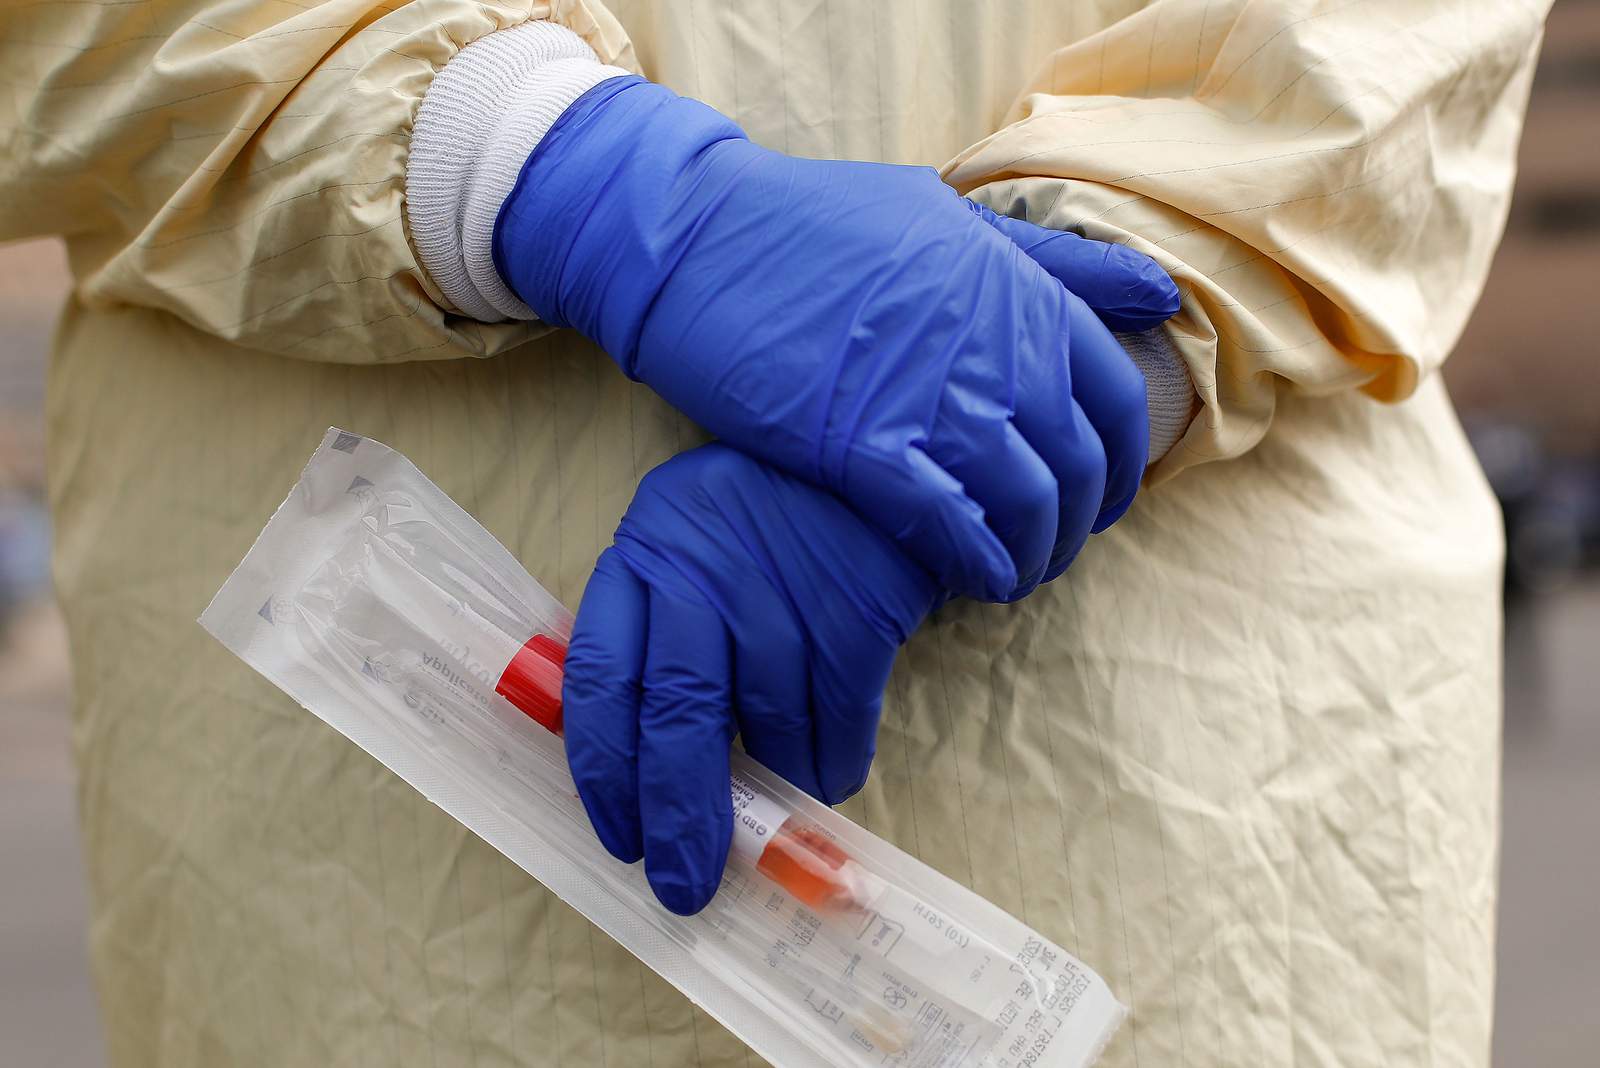 More than 2,200 new coronavirus cases reported in Georgia